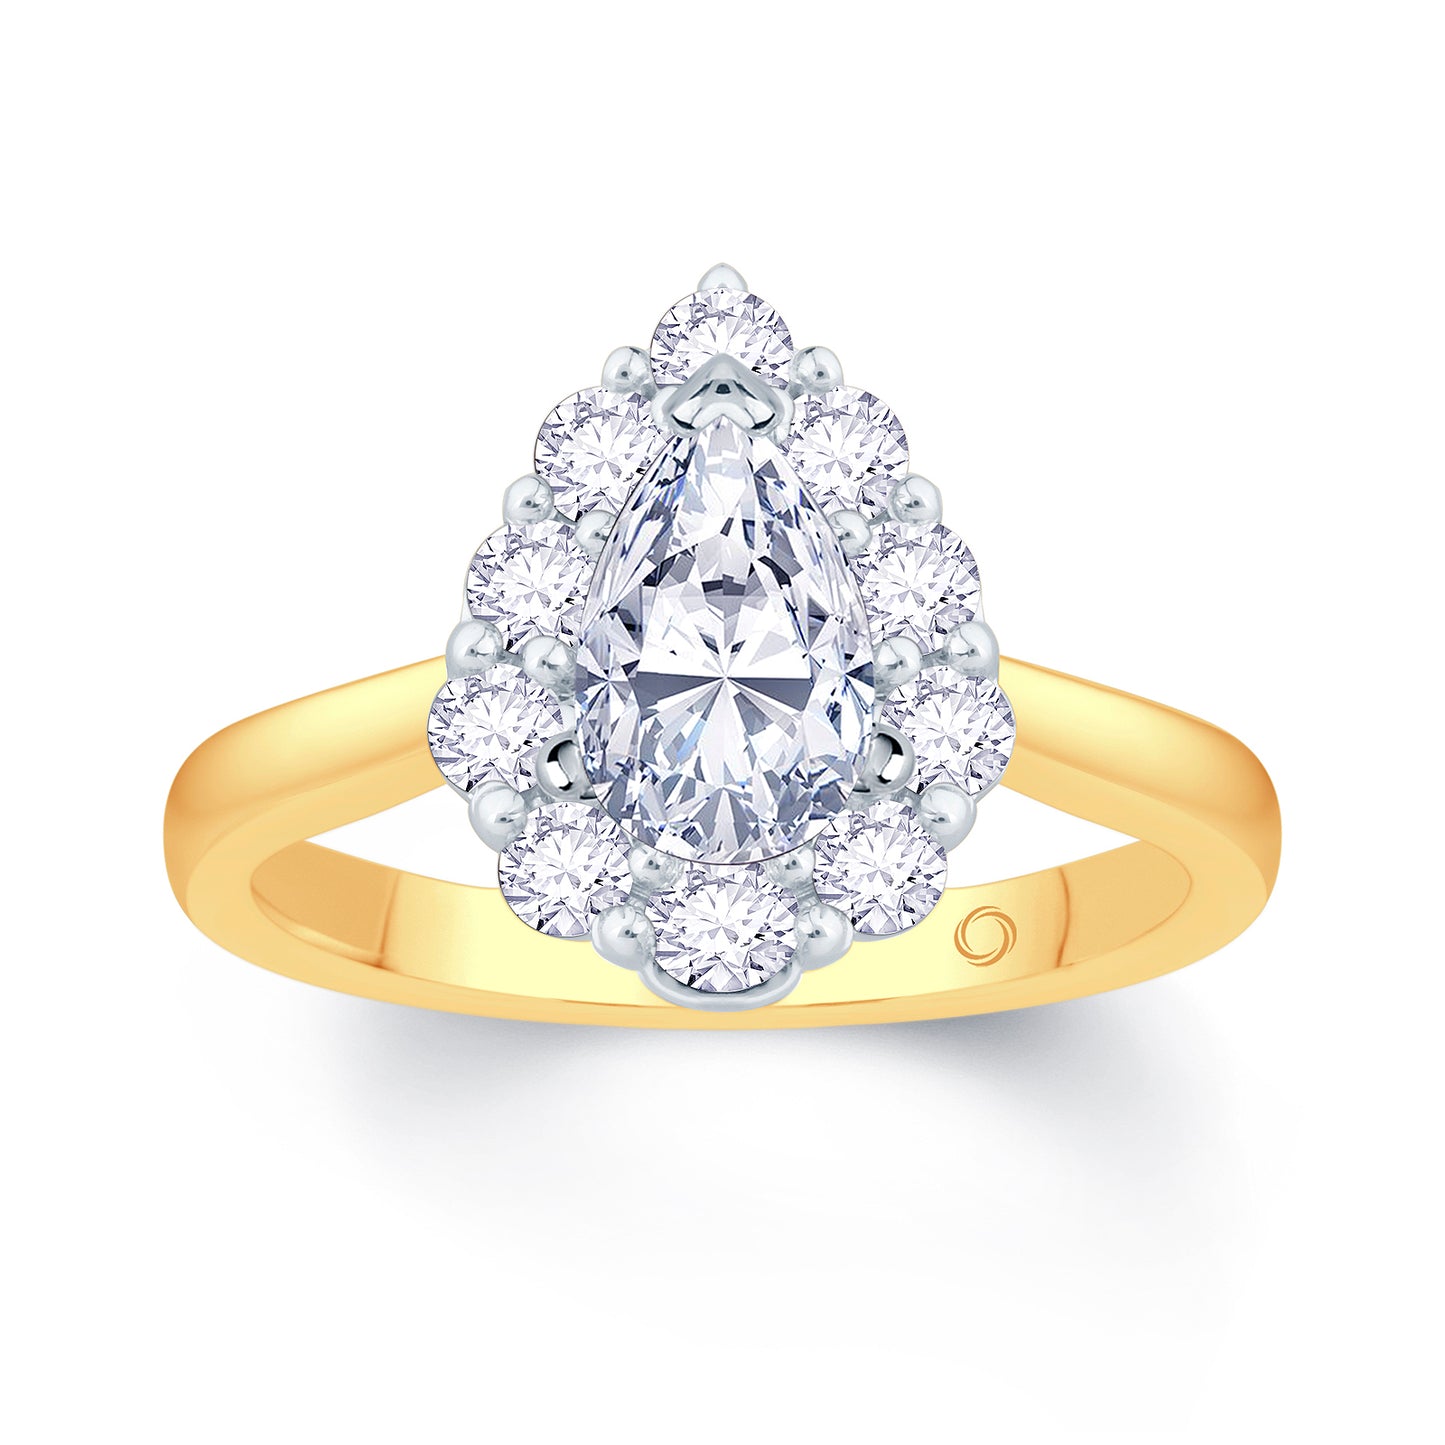 18ct Yellow Gold Pear & Halo Diamond Ring 0.85ct